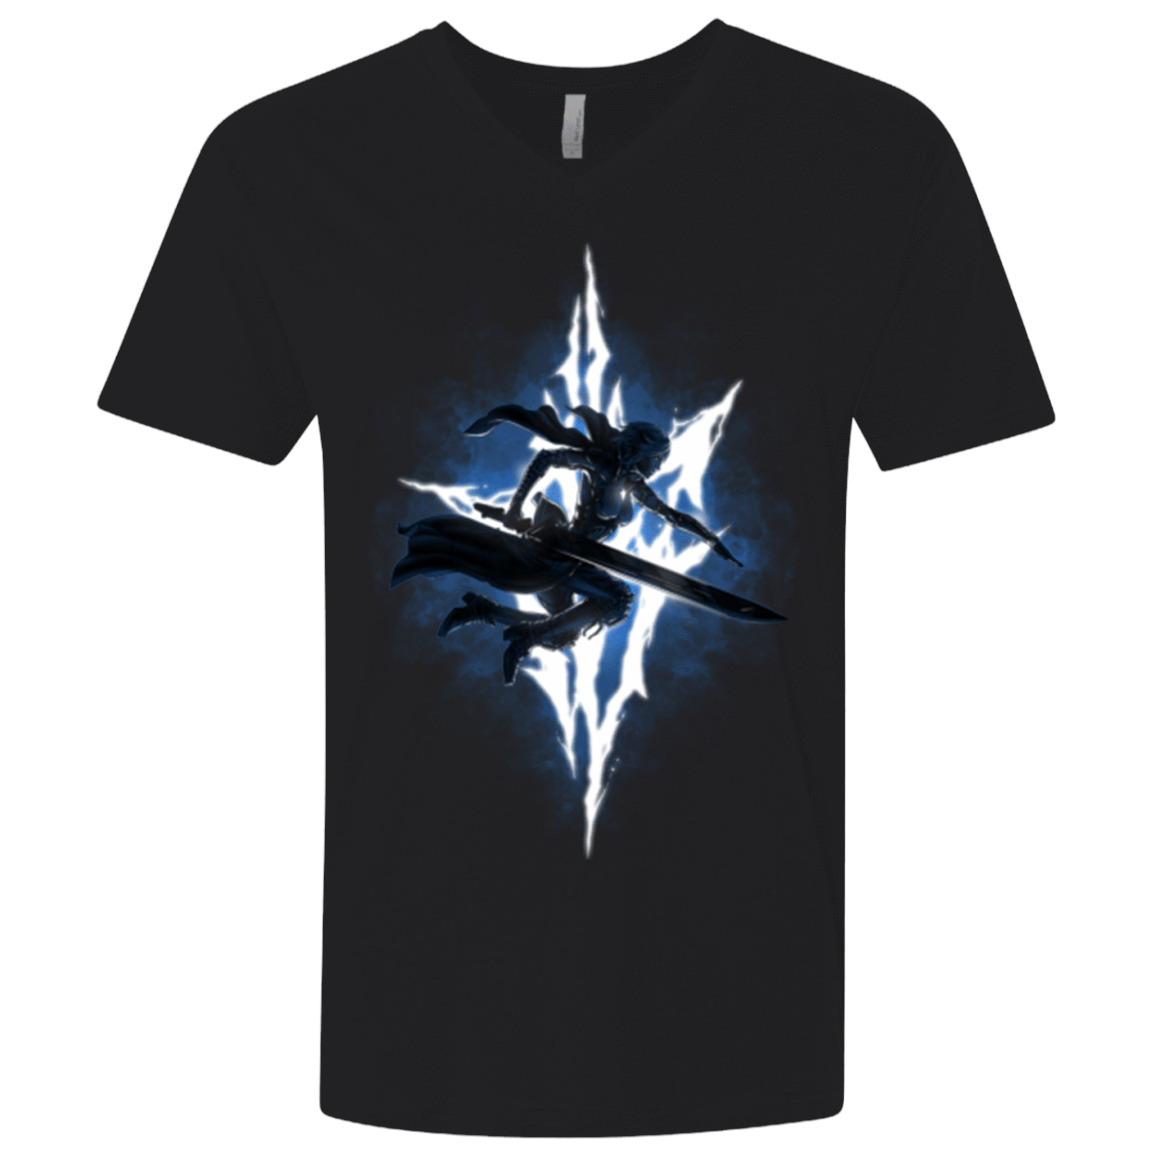 T-Shirts Black / X-Small Lightning Returns Men's Premium V-Neck